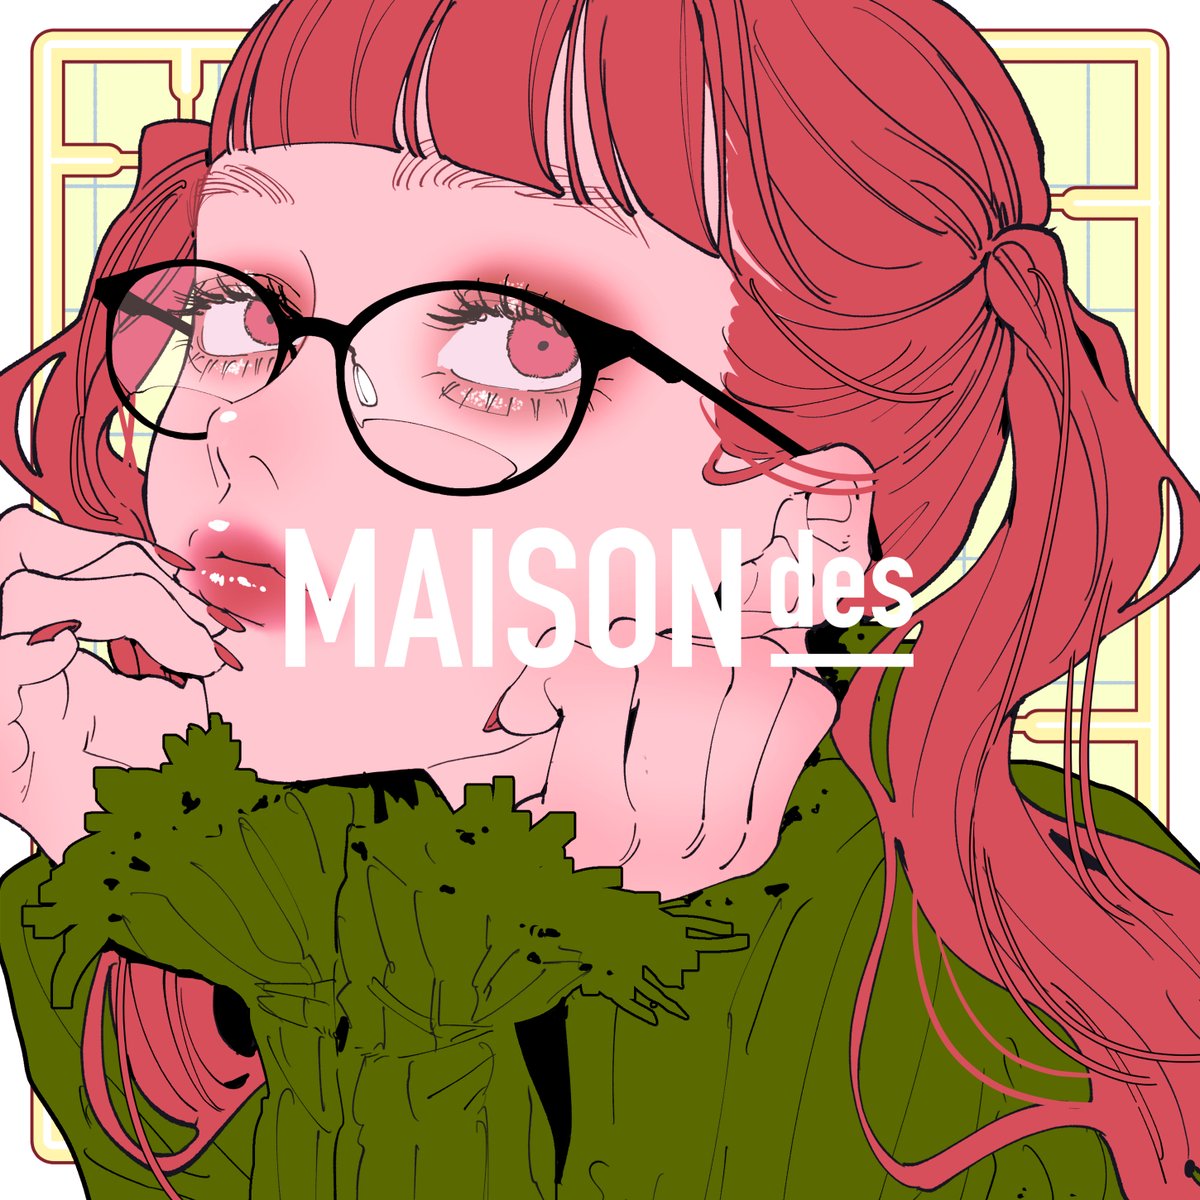 『MAISONdes - アイワナムチュー feat. asmi, すりぃ』収録の『アイワナムチュー feat. asmi, すりぃ』ジャケット